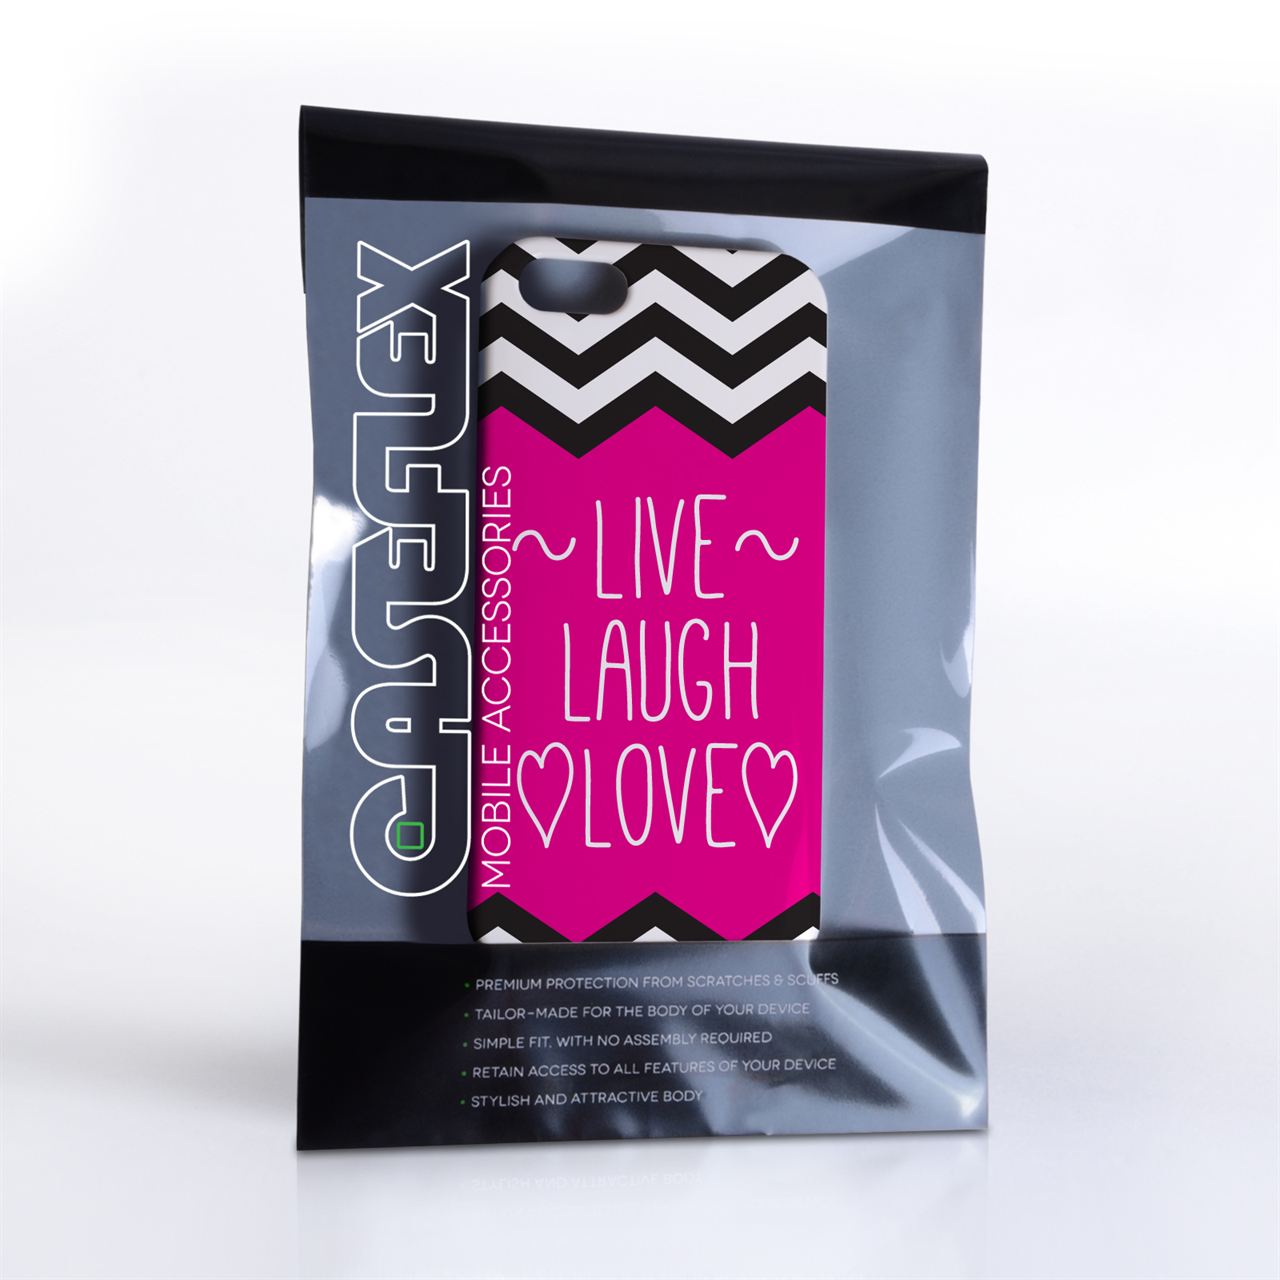 Caseflex iPhone 5 / 5S Live Laugh Love Heart Case